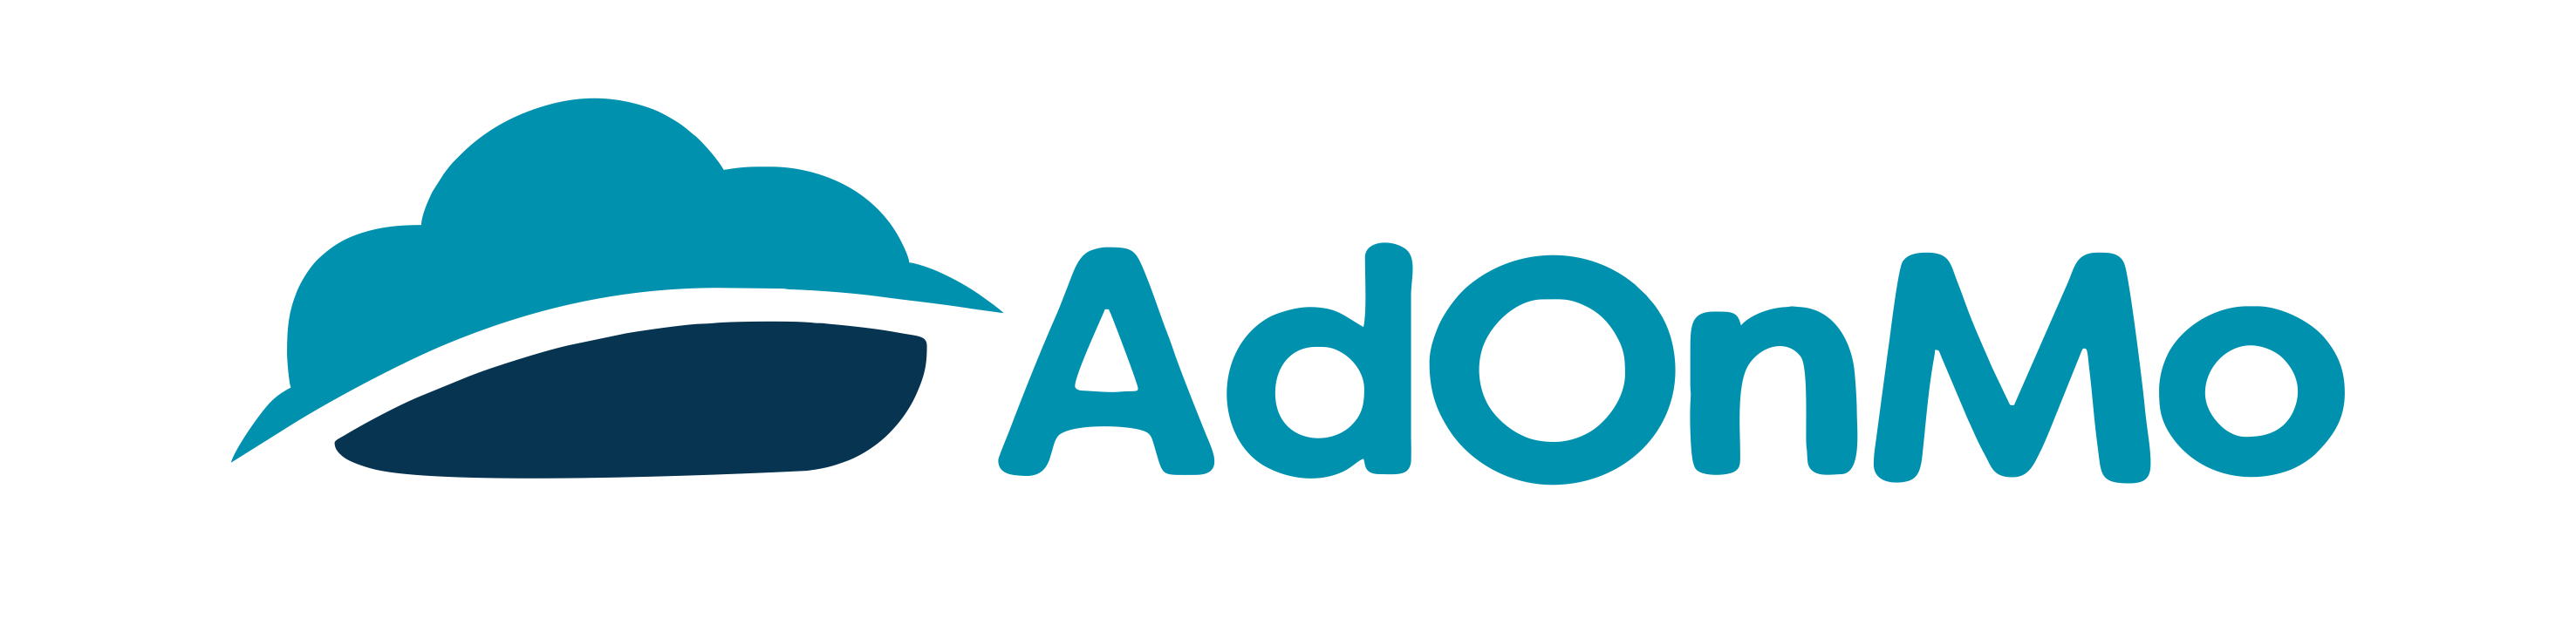 HQ Adonmo Logo